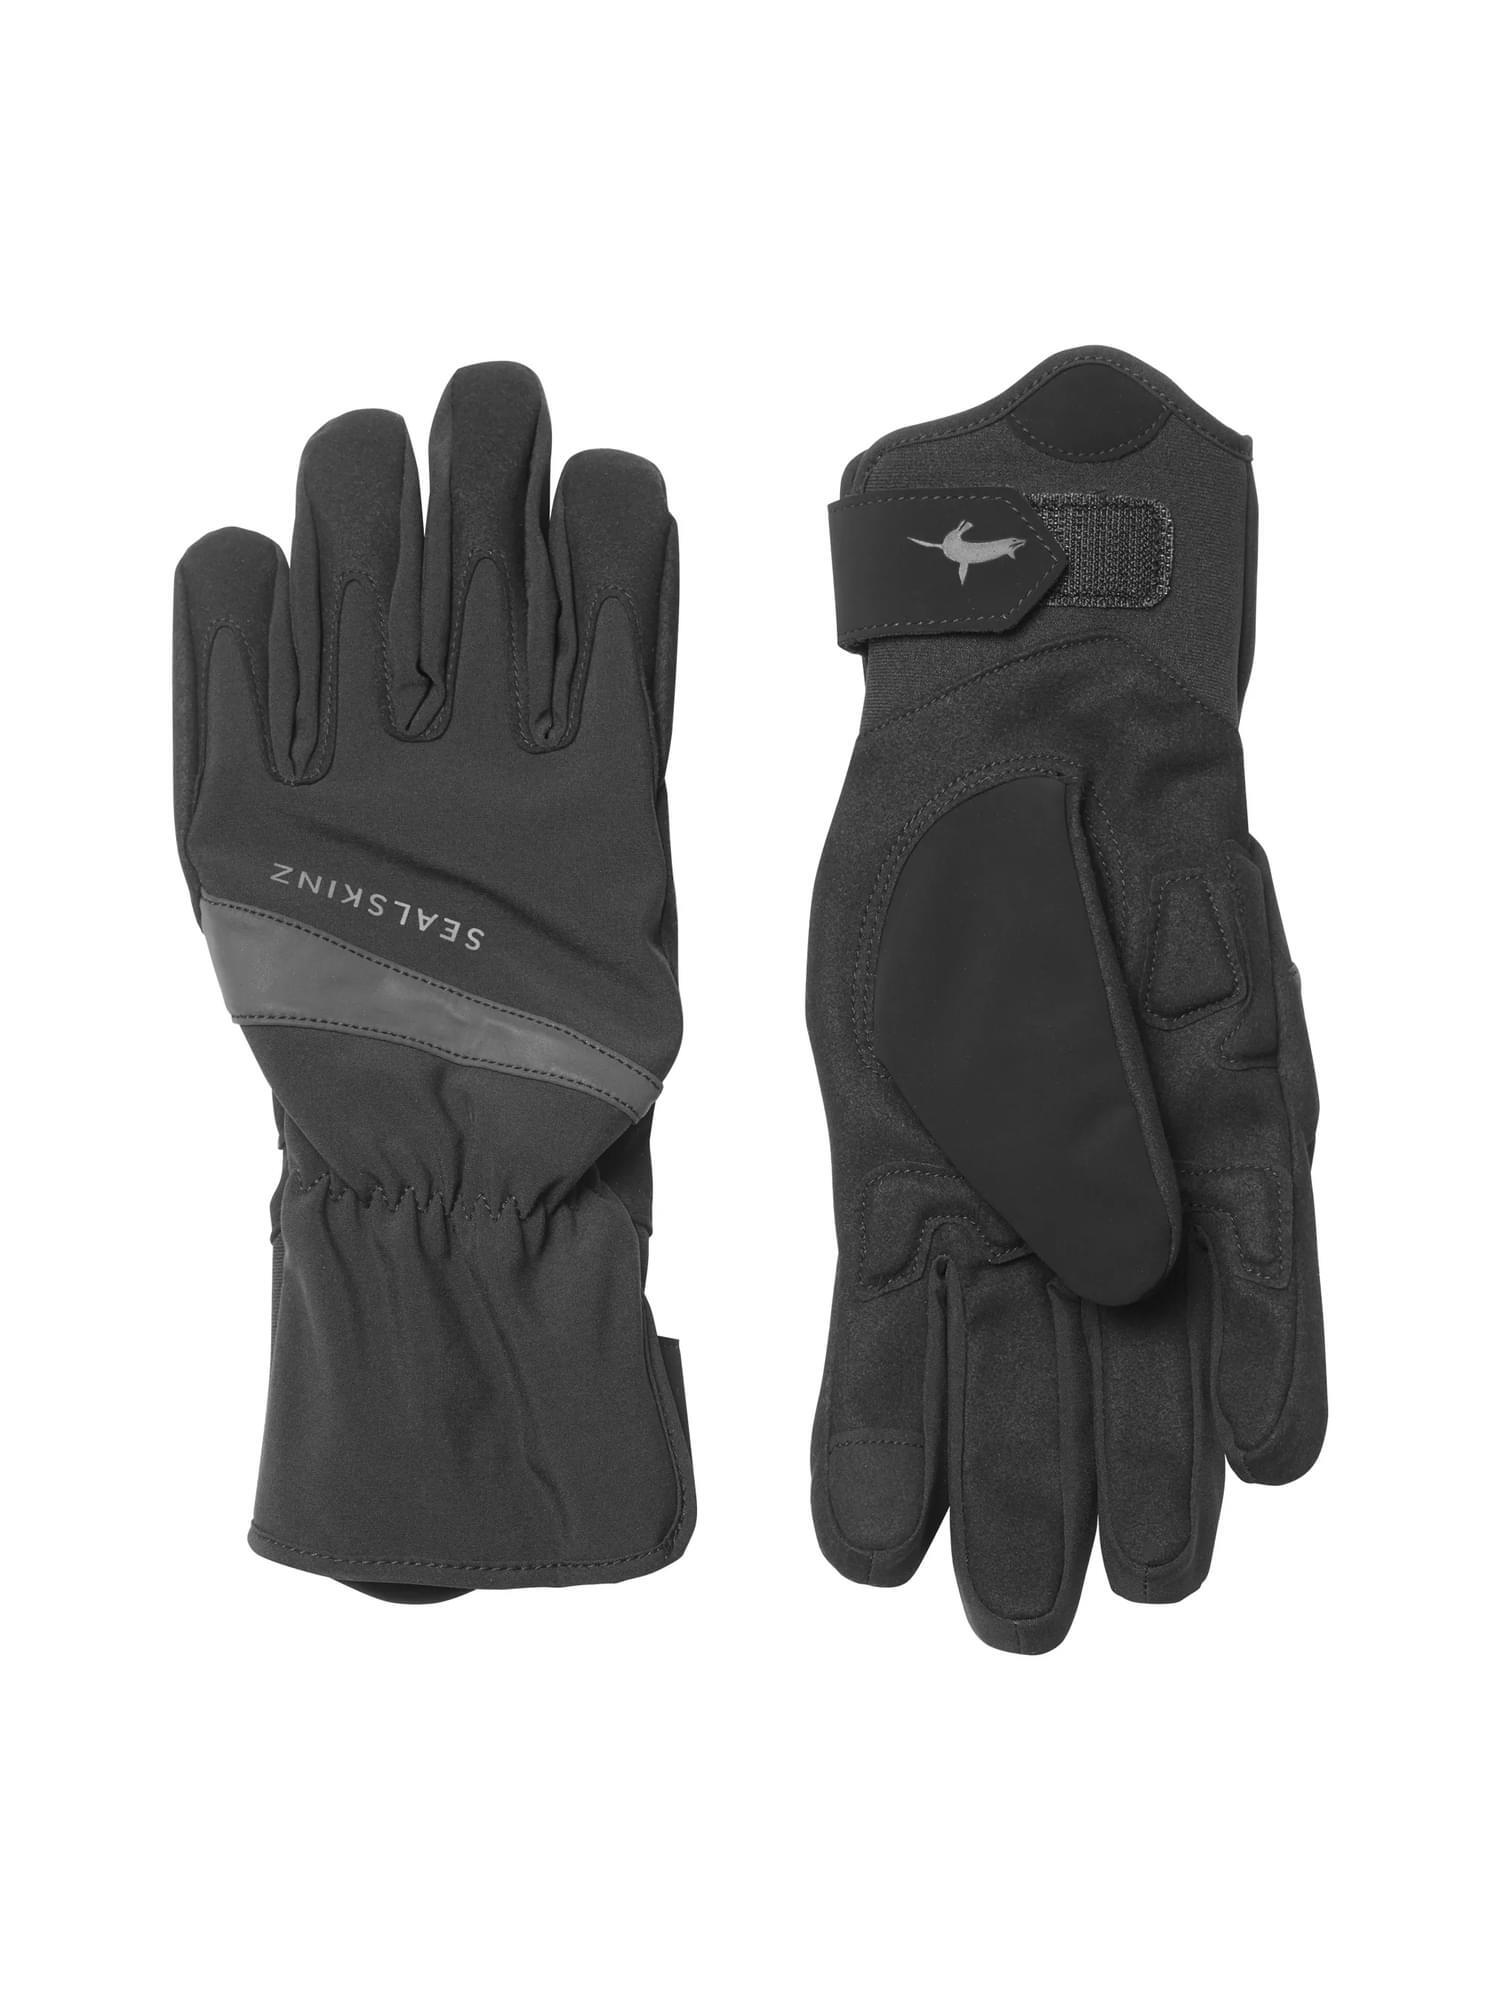 SEALSKINZ Ladies Waterproof All Weather Cycle Gloves